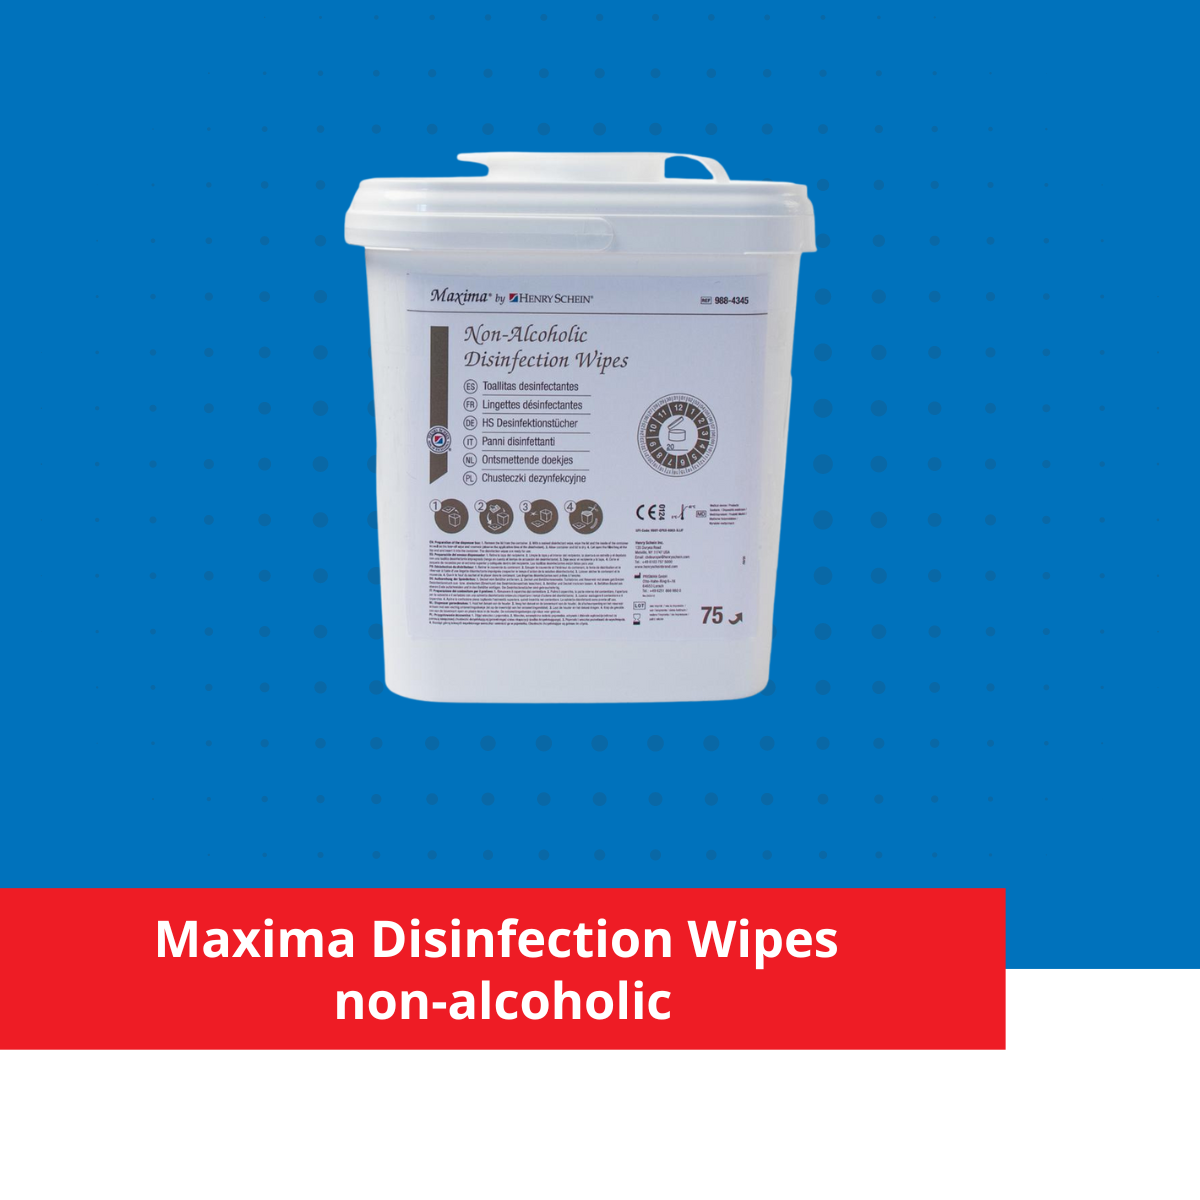 Maxima Disinfection Wipes non-alcoholic